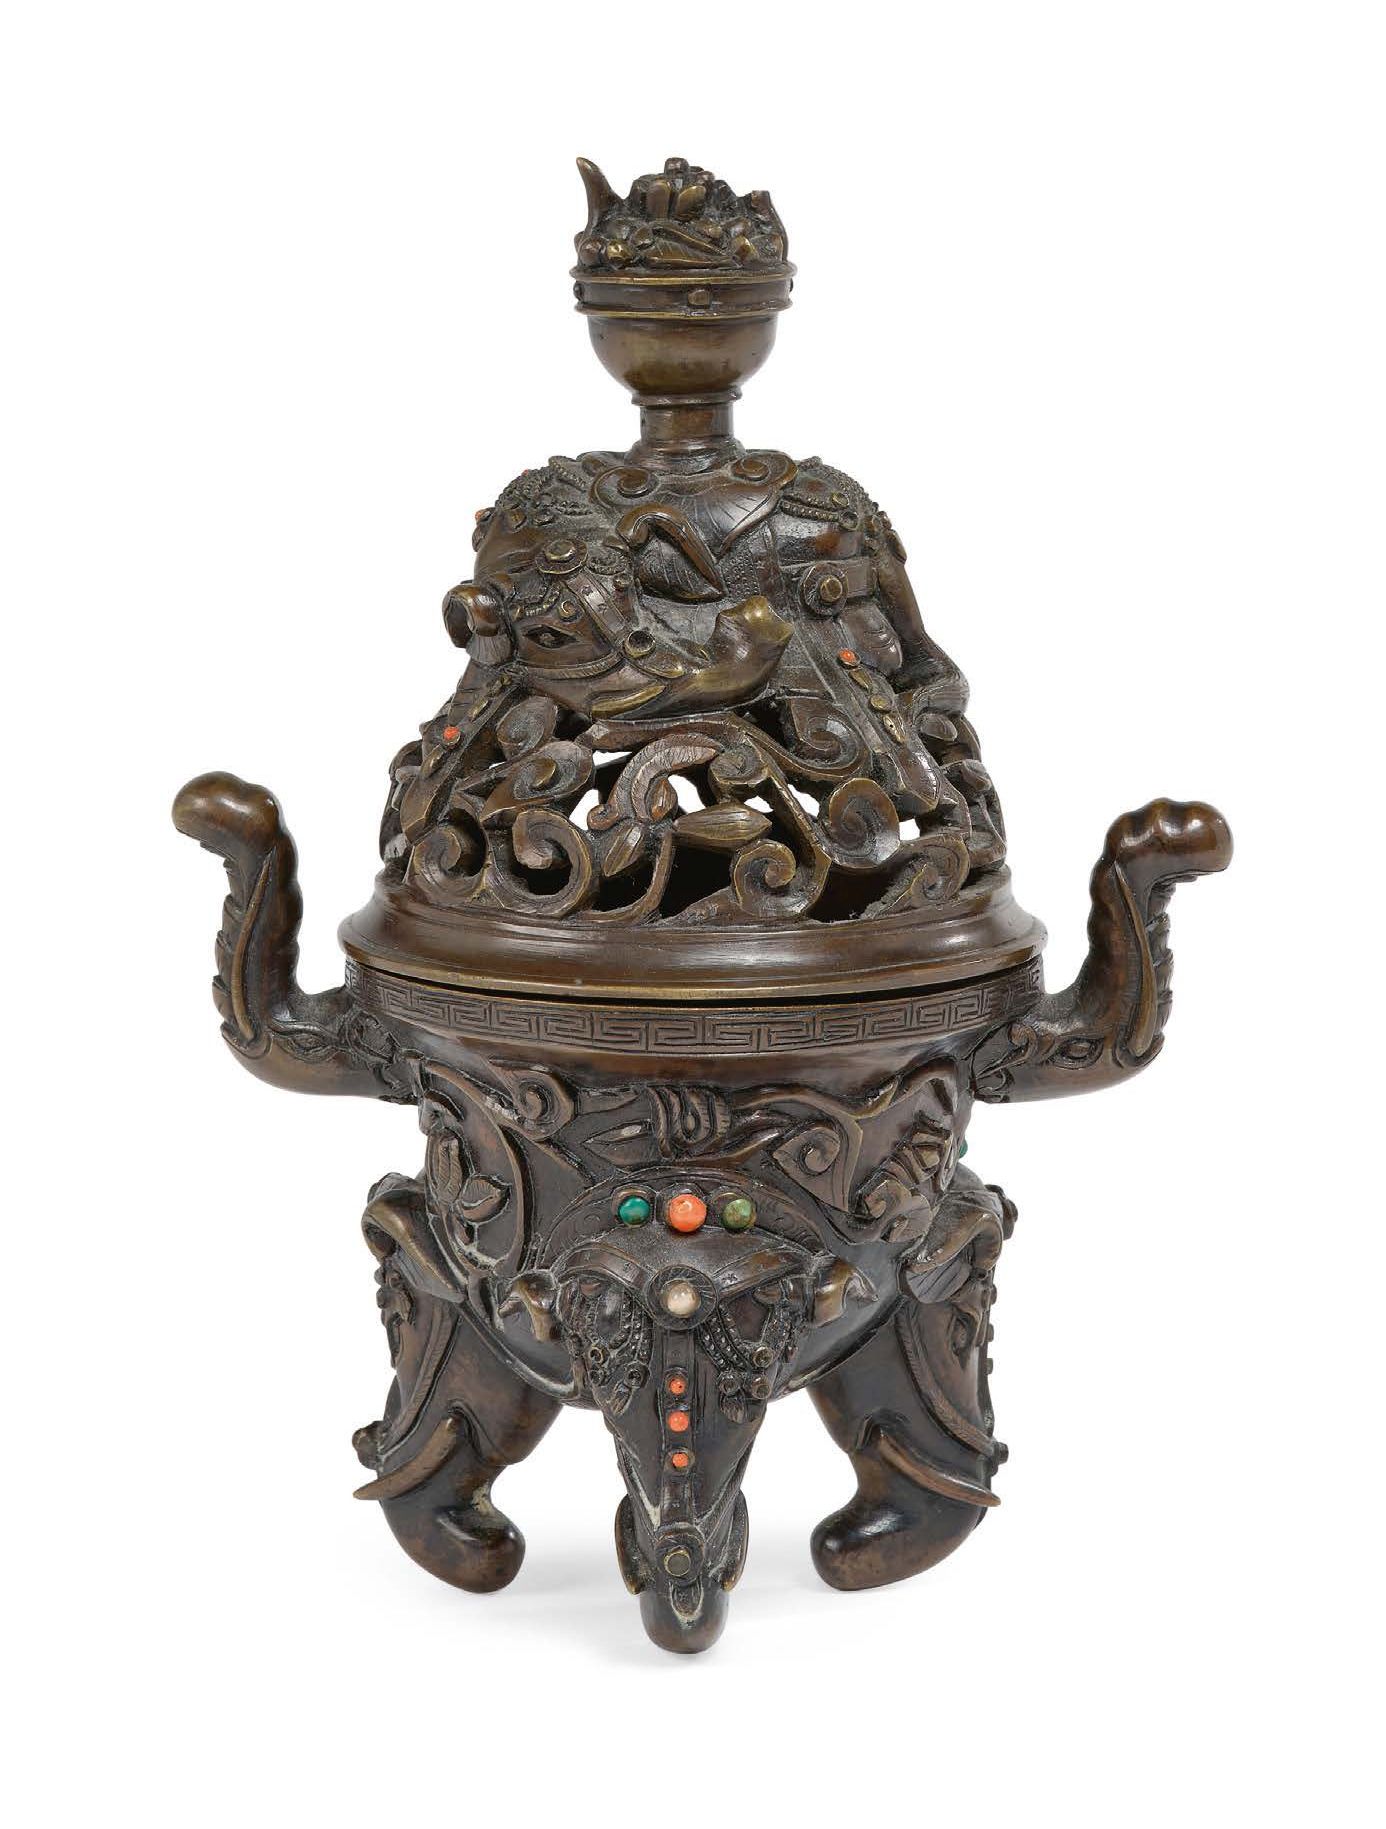 CHINE DYNASTIE QING, XIXe SIÈCLE 中国 清代 19世纪
小型青铜香炉